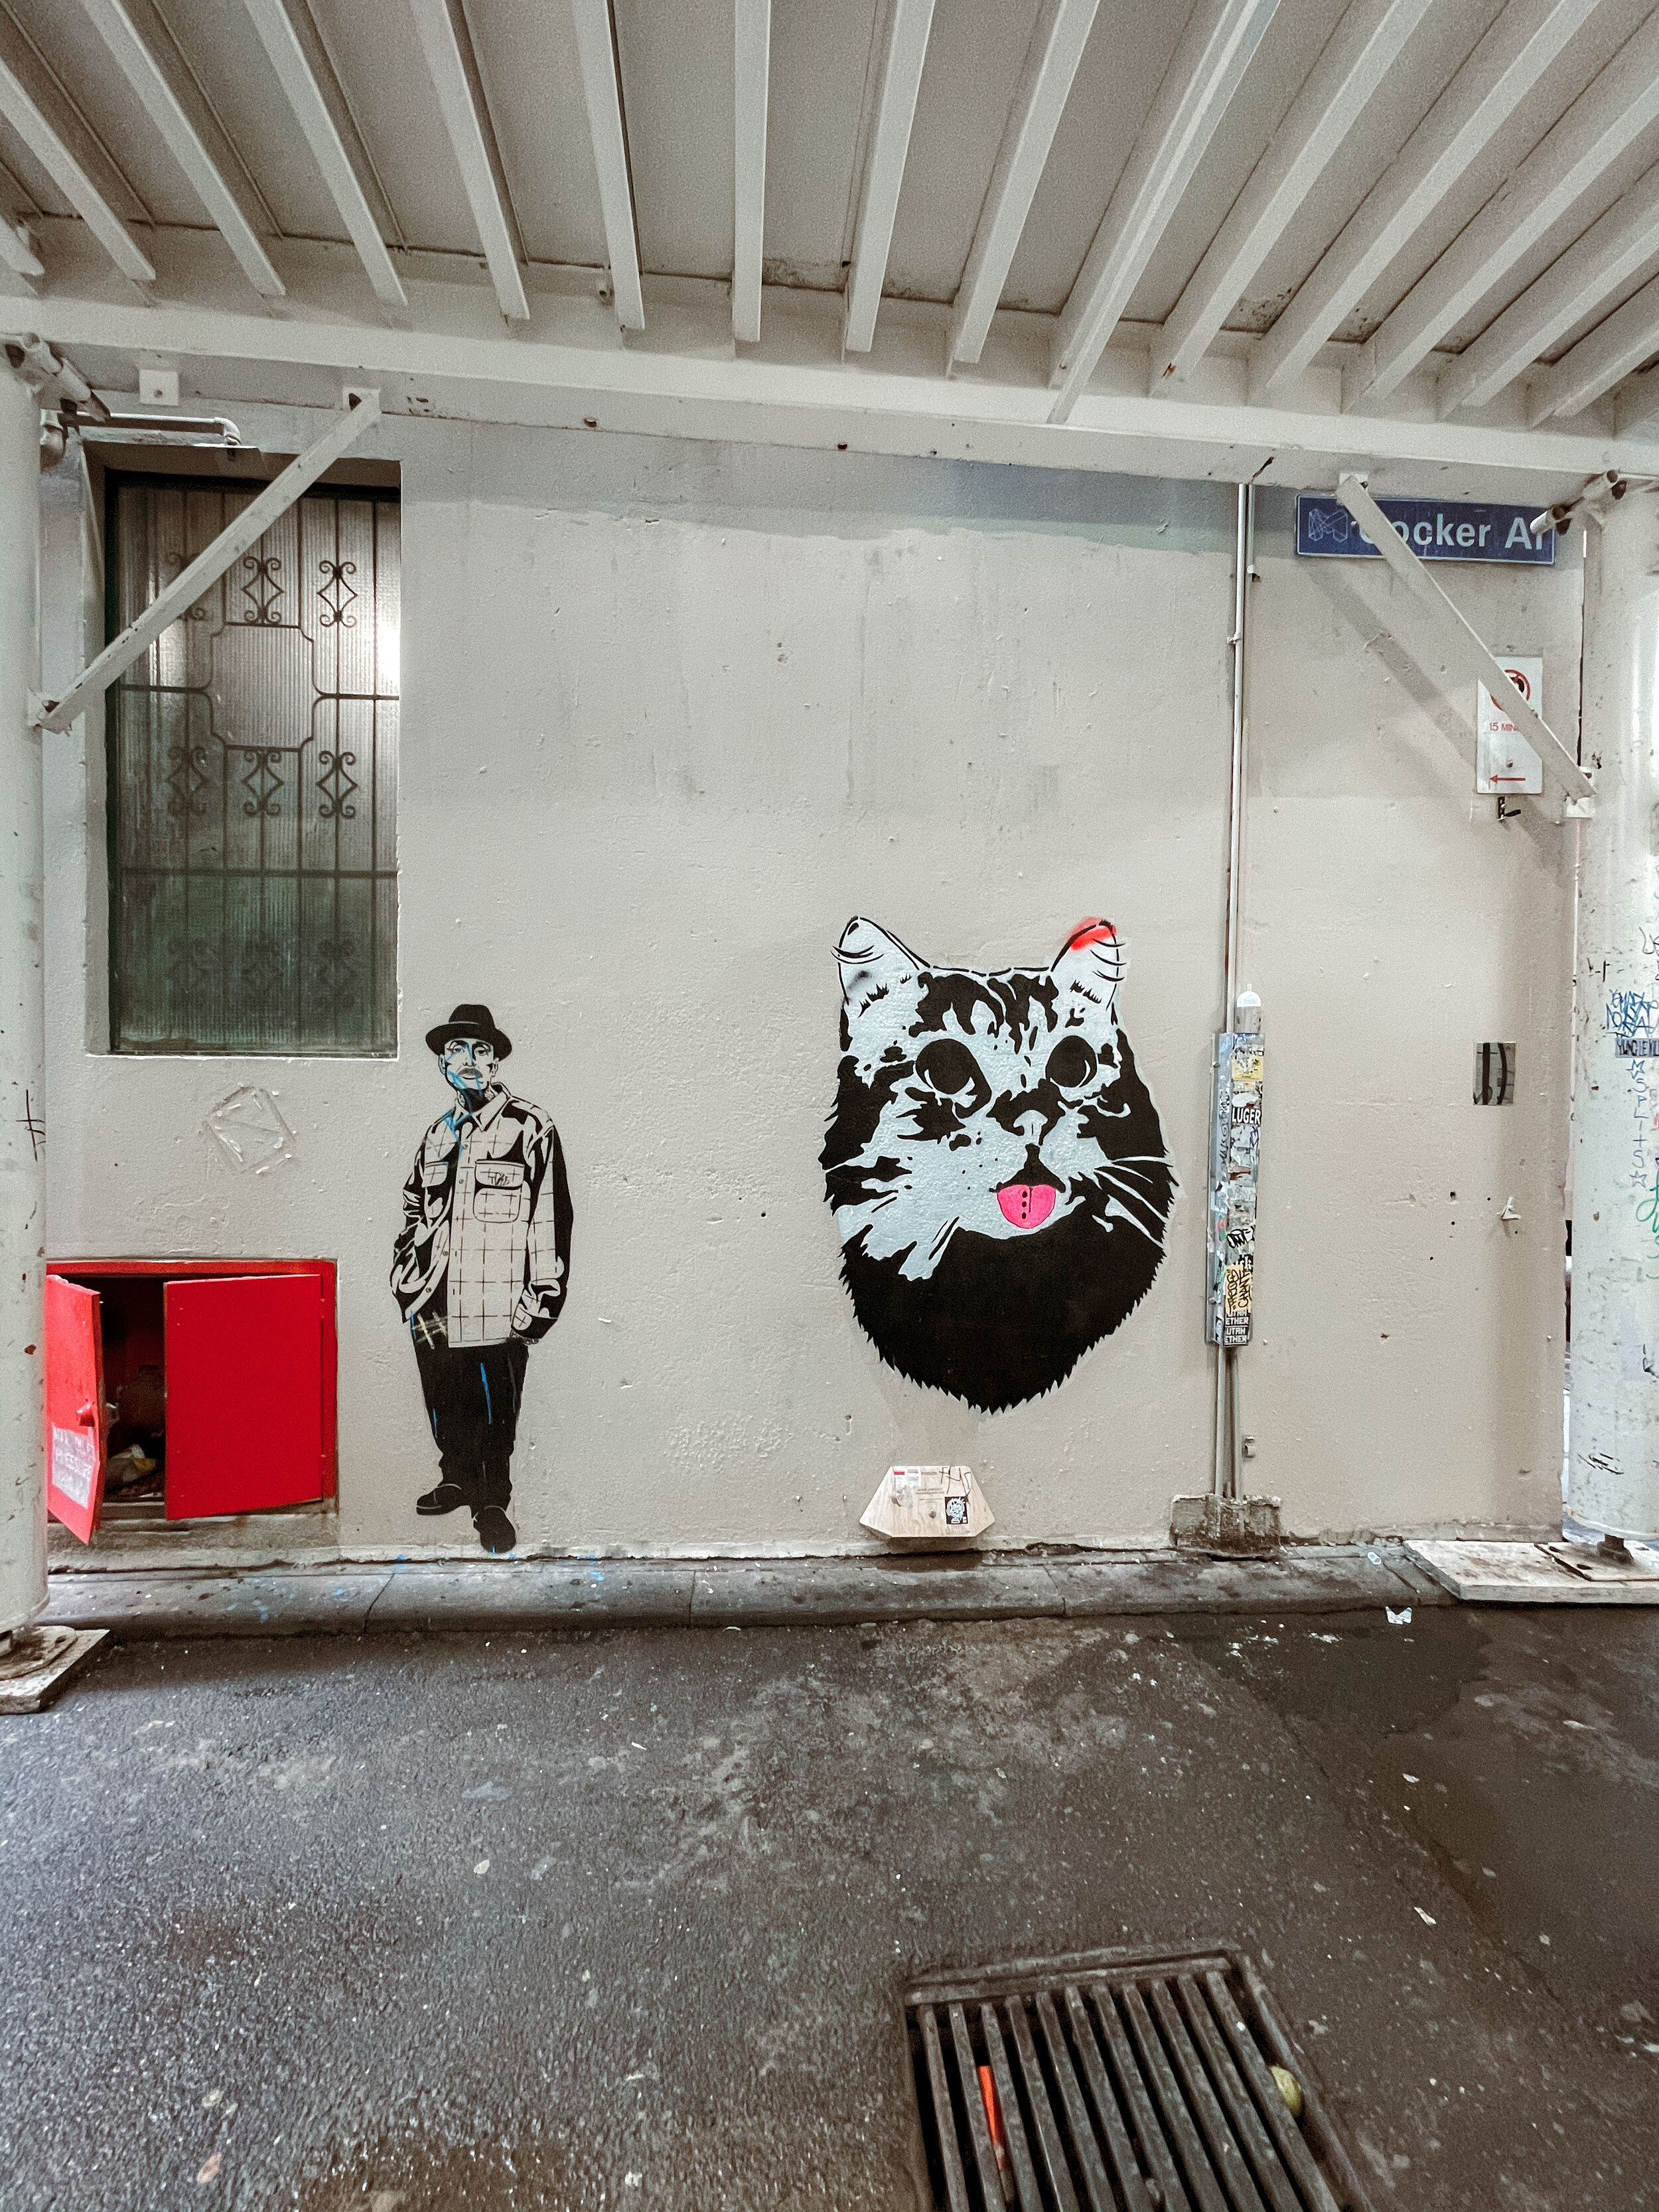 Alleyway graffiti art - Melbourne - Victoria - Australia